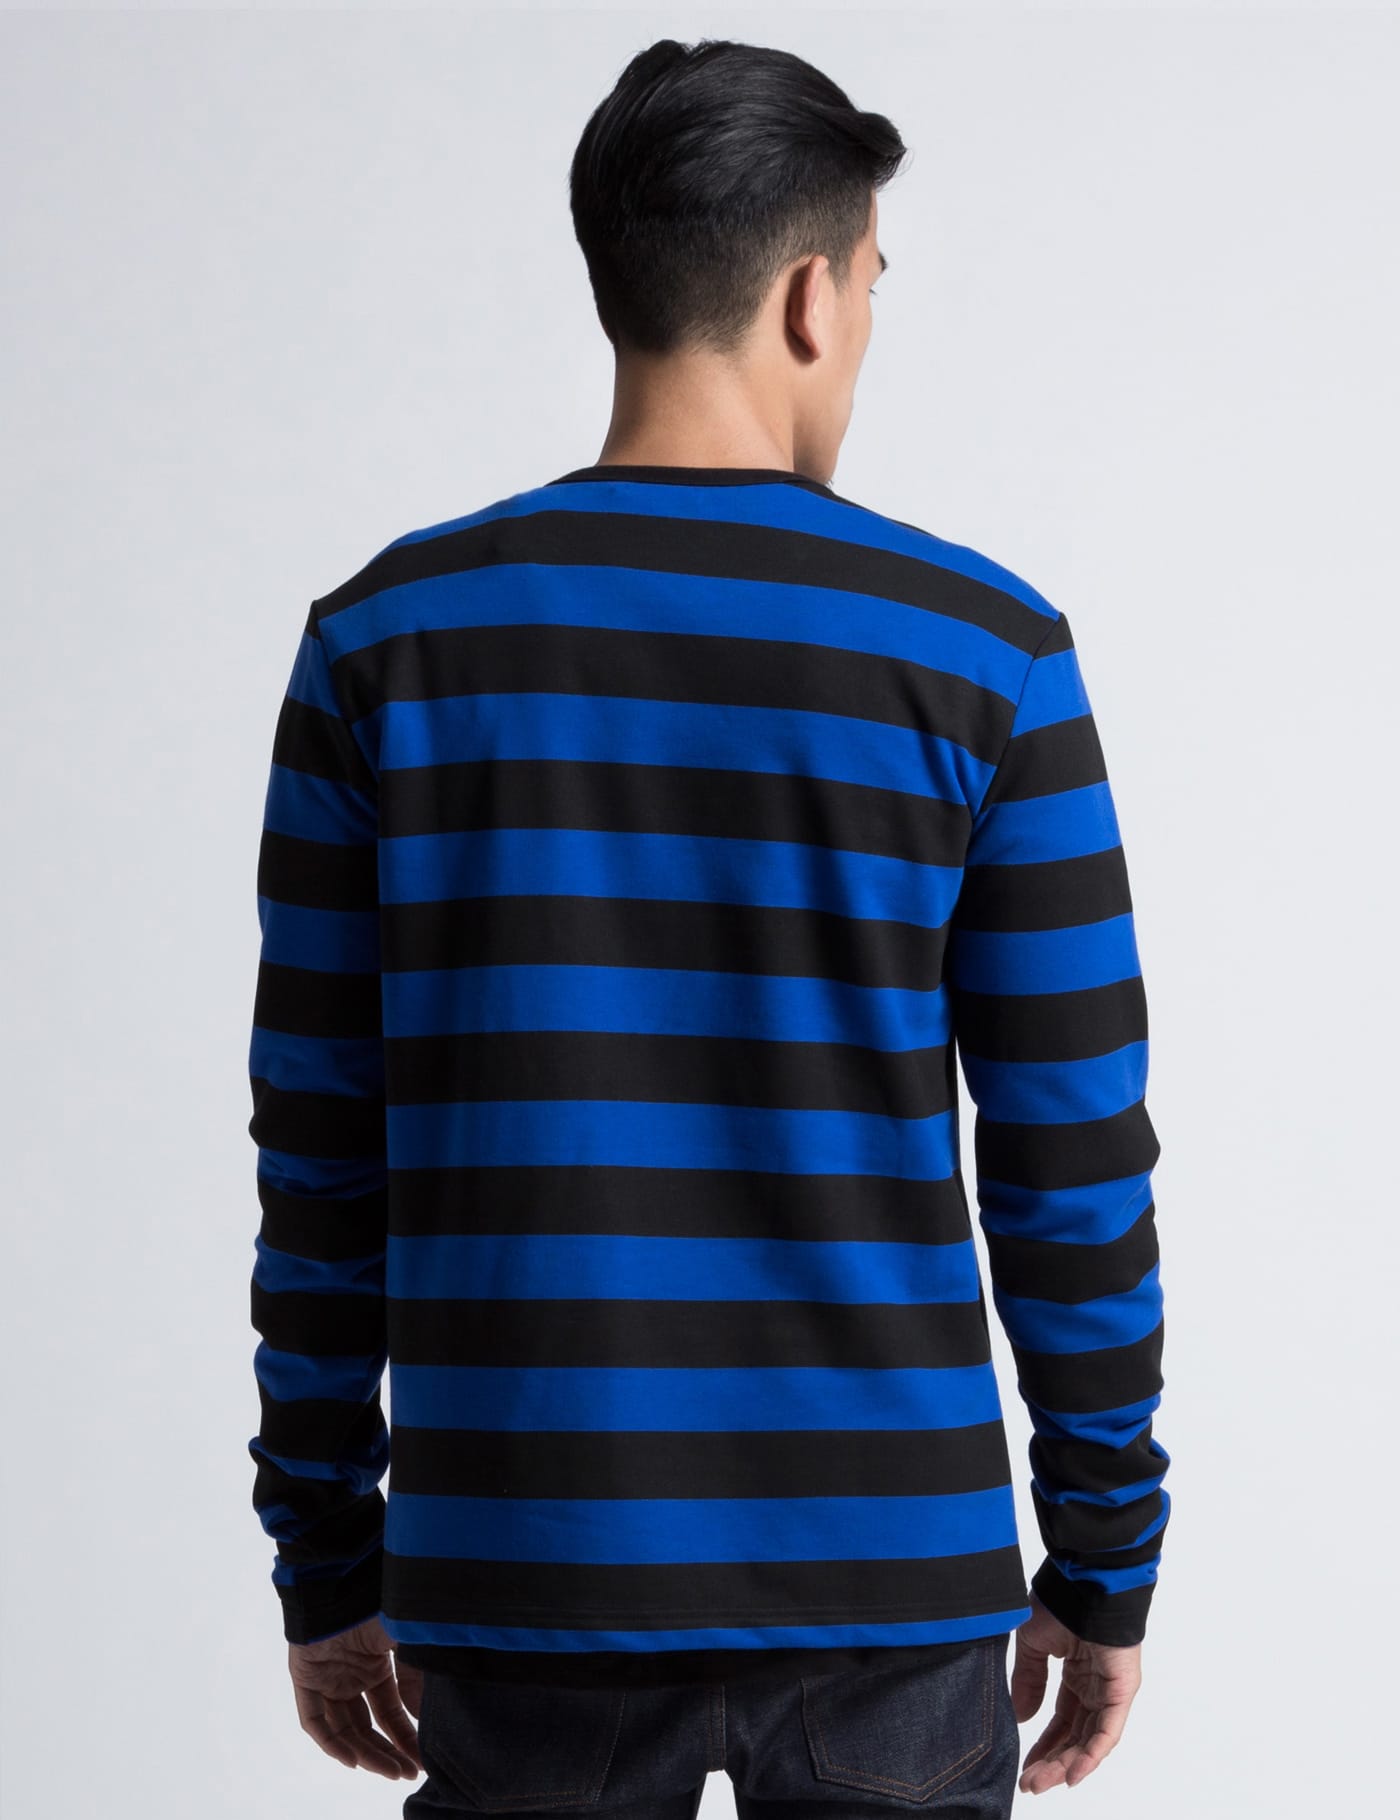 Midnight Studios - Black/Blue Striped L/S T-Shirt | HBX - Globally